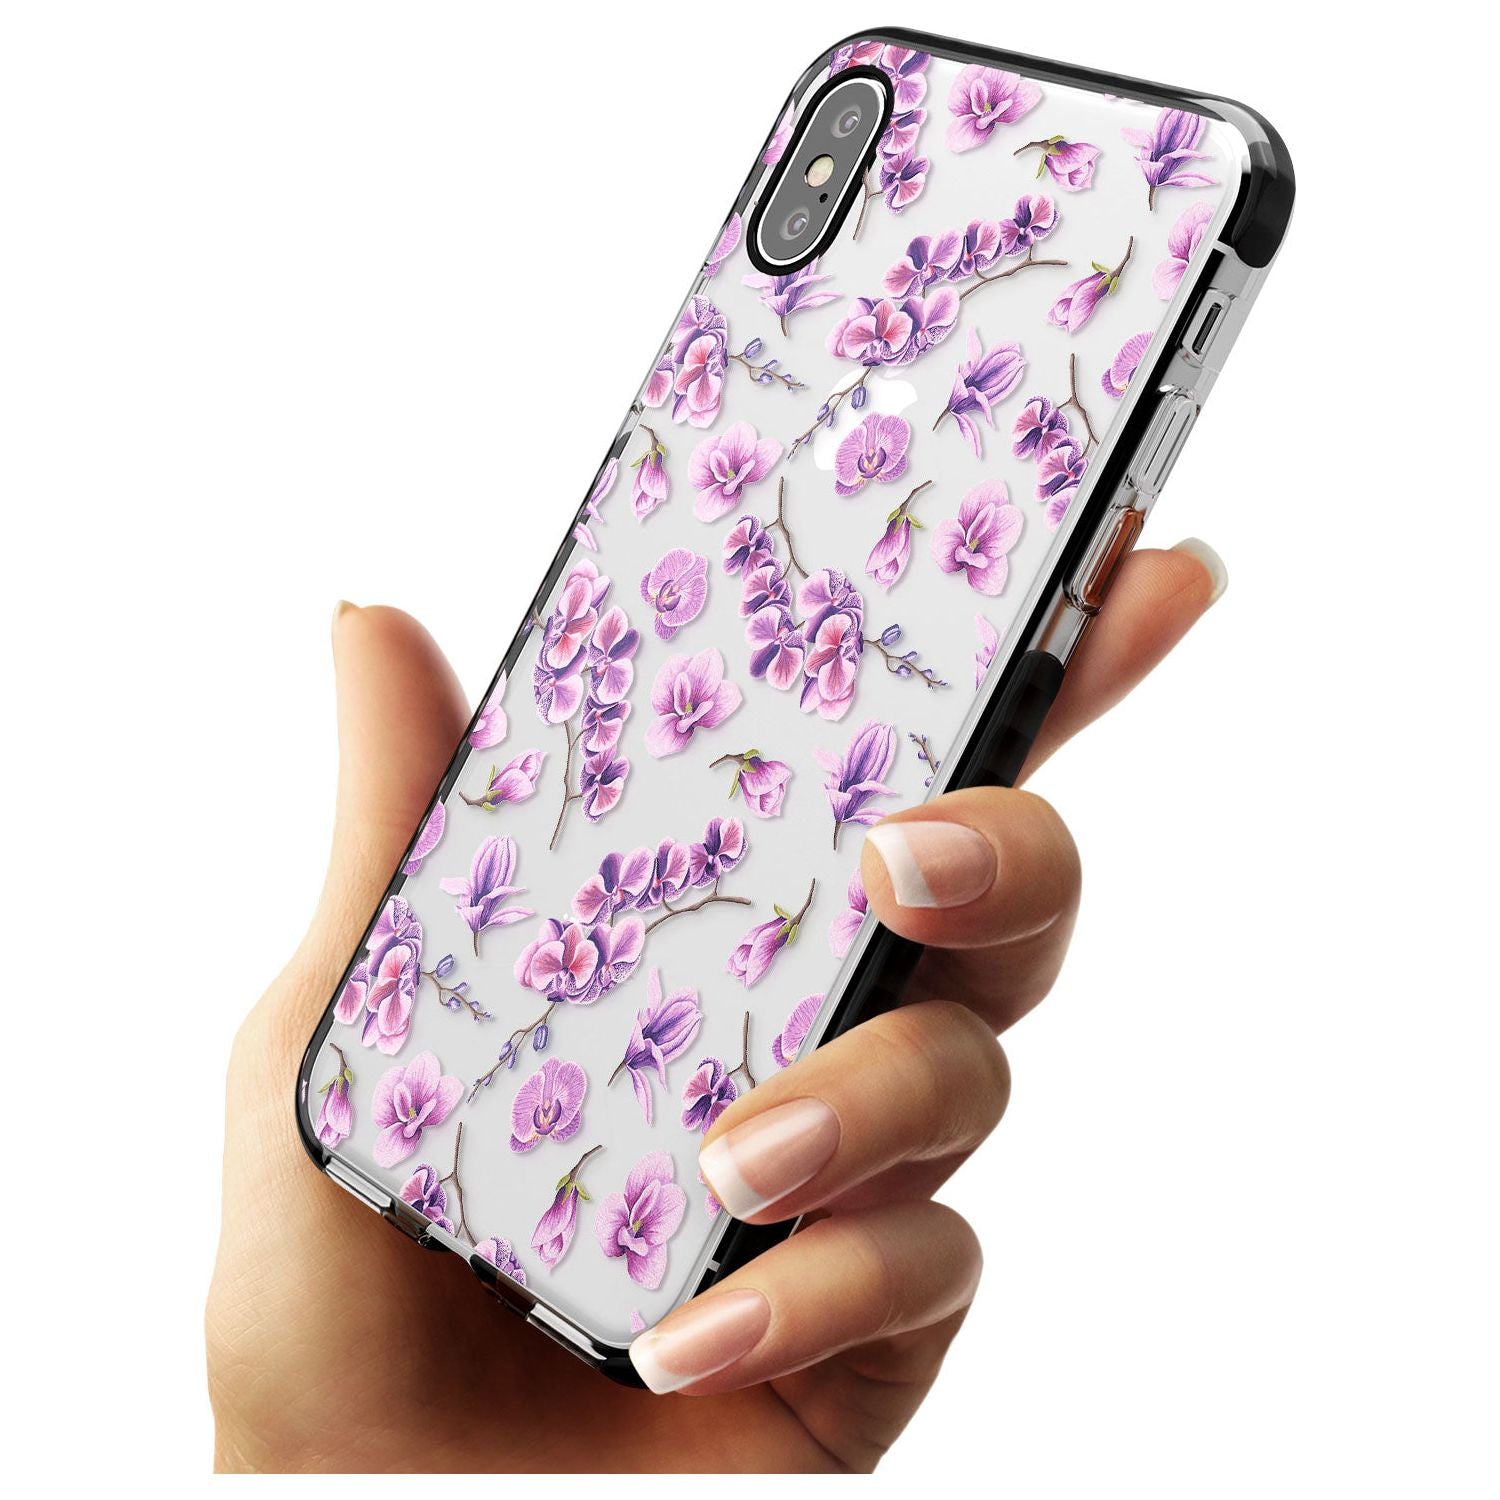 Purple Orchids Transparent Floral Black Impact Phone Case for iPhone X XS Max XR